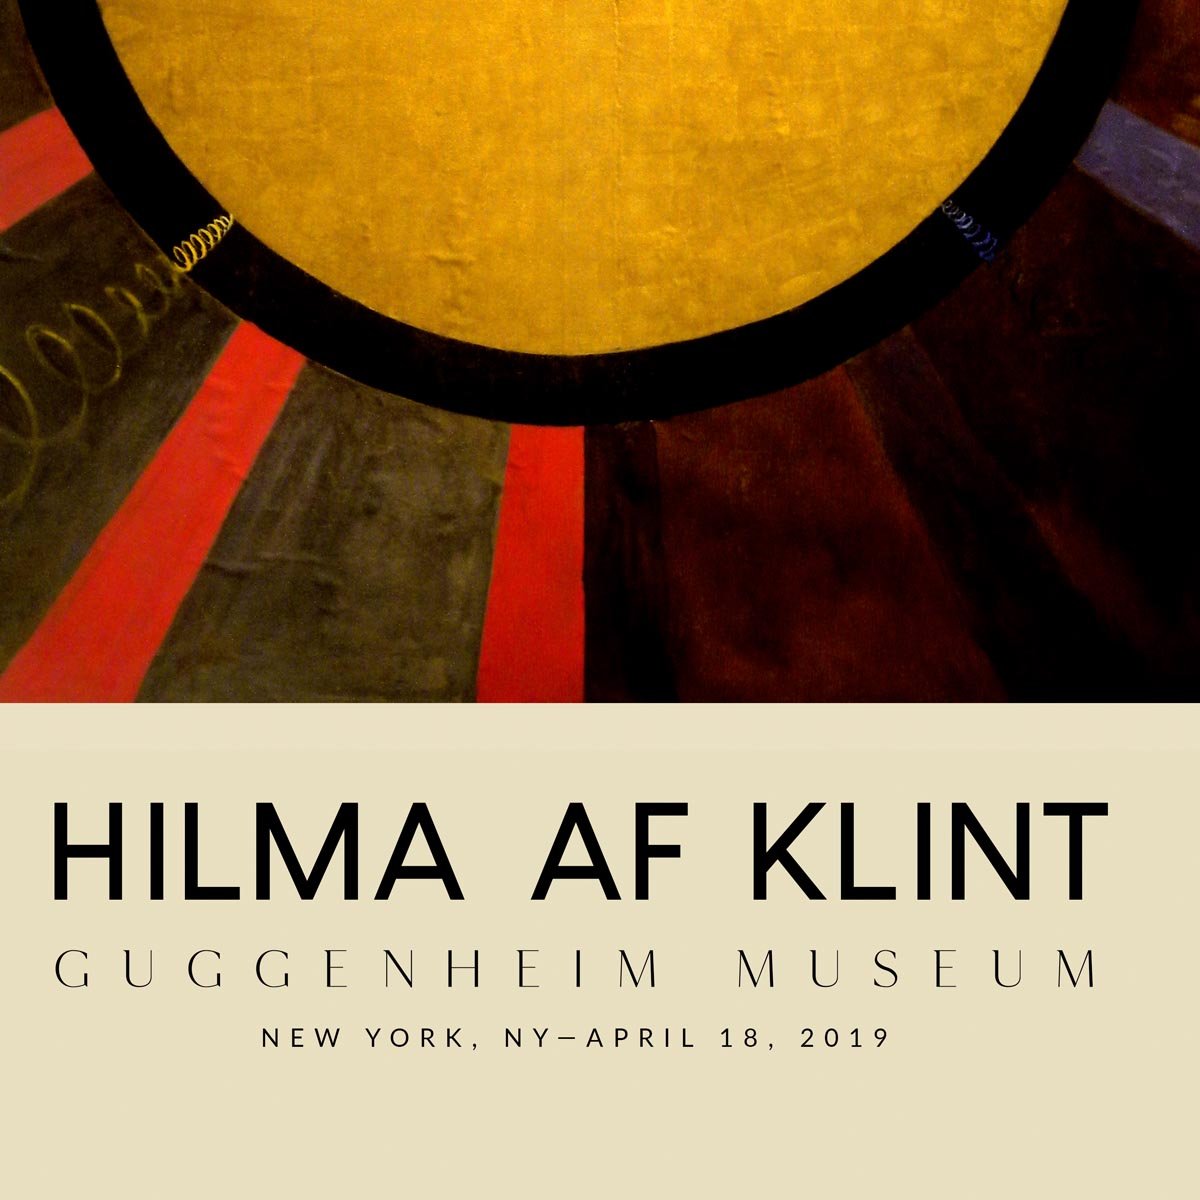 Hilma Af Klint Exhibition Poster Alterpiece Nr 3